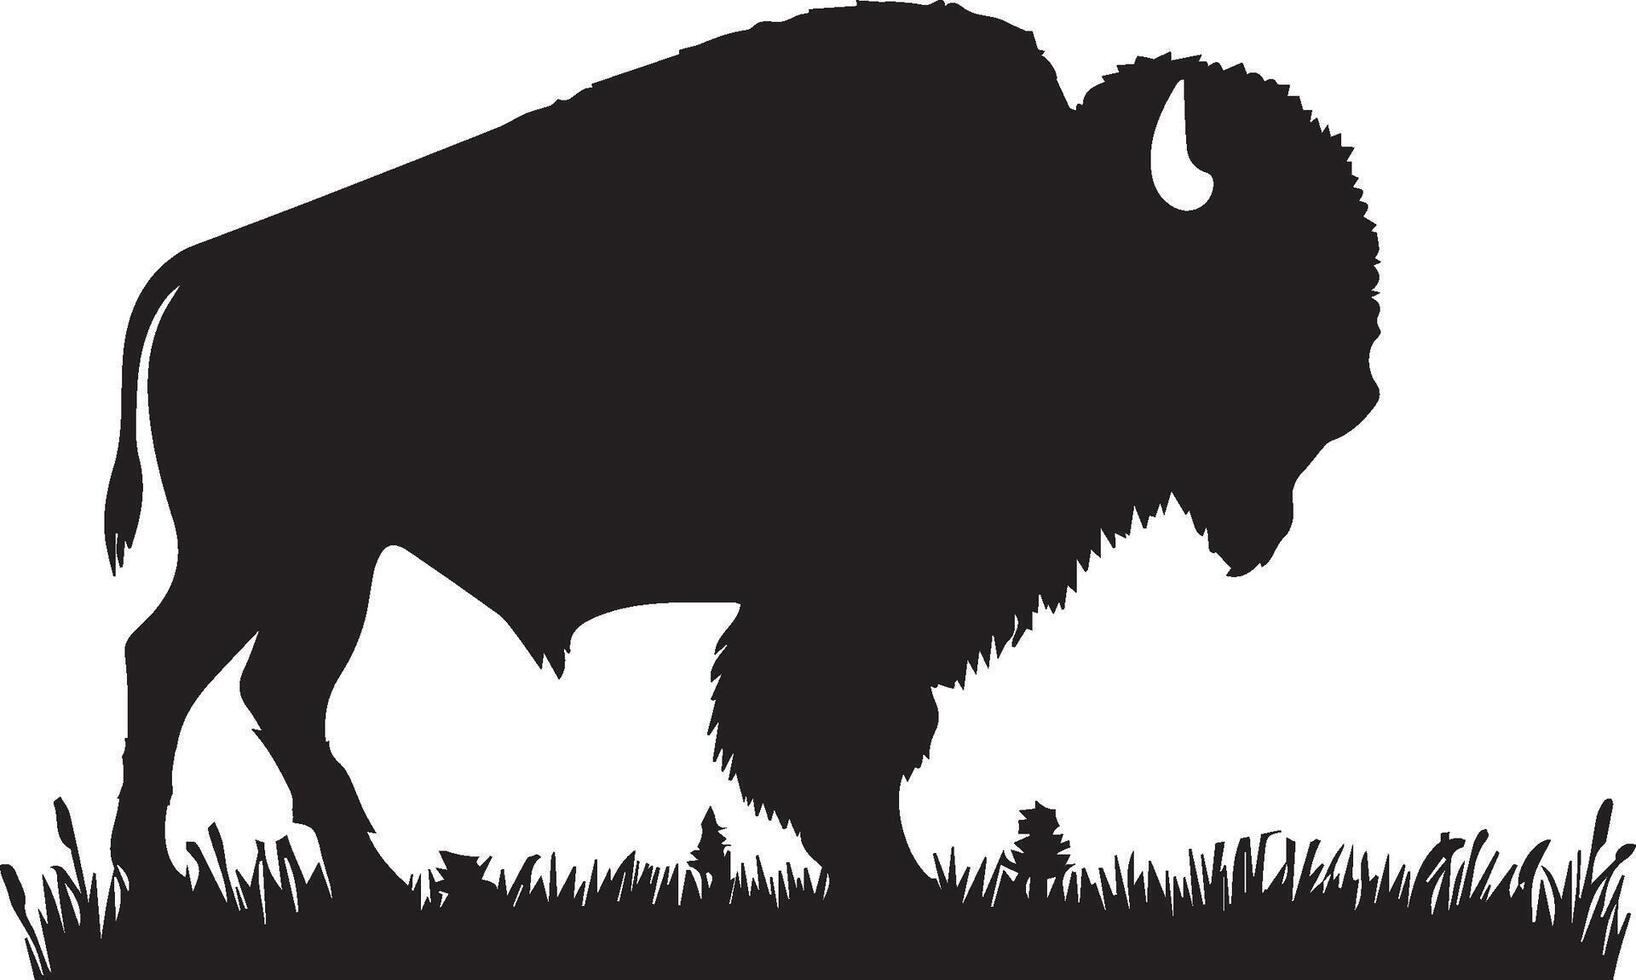 búfalo silhueta isolado em branco fundo. vaca logotipo vetor